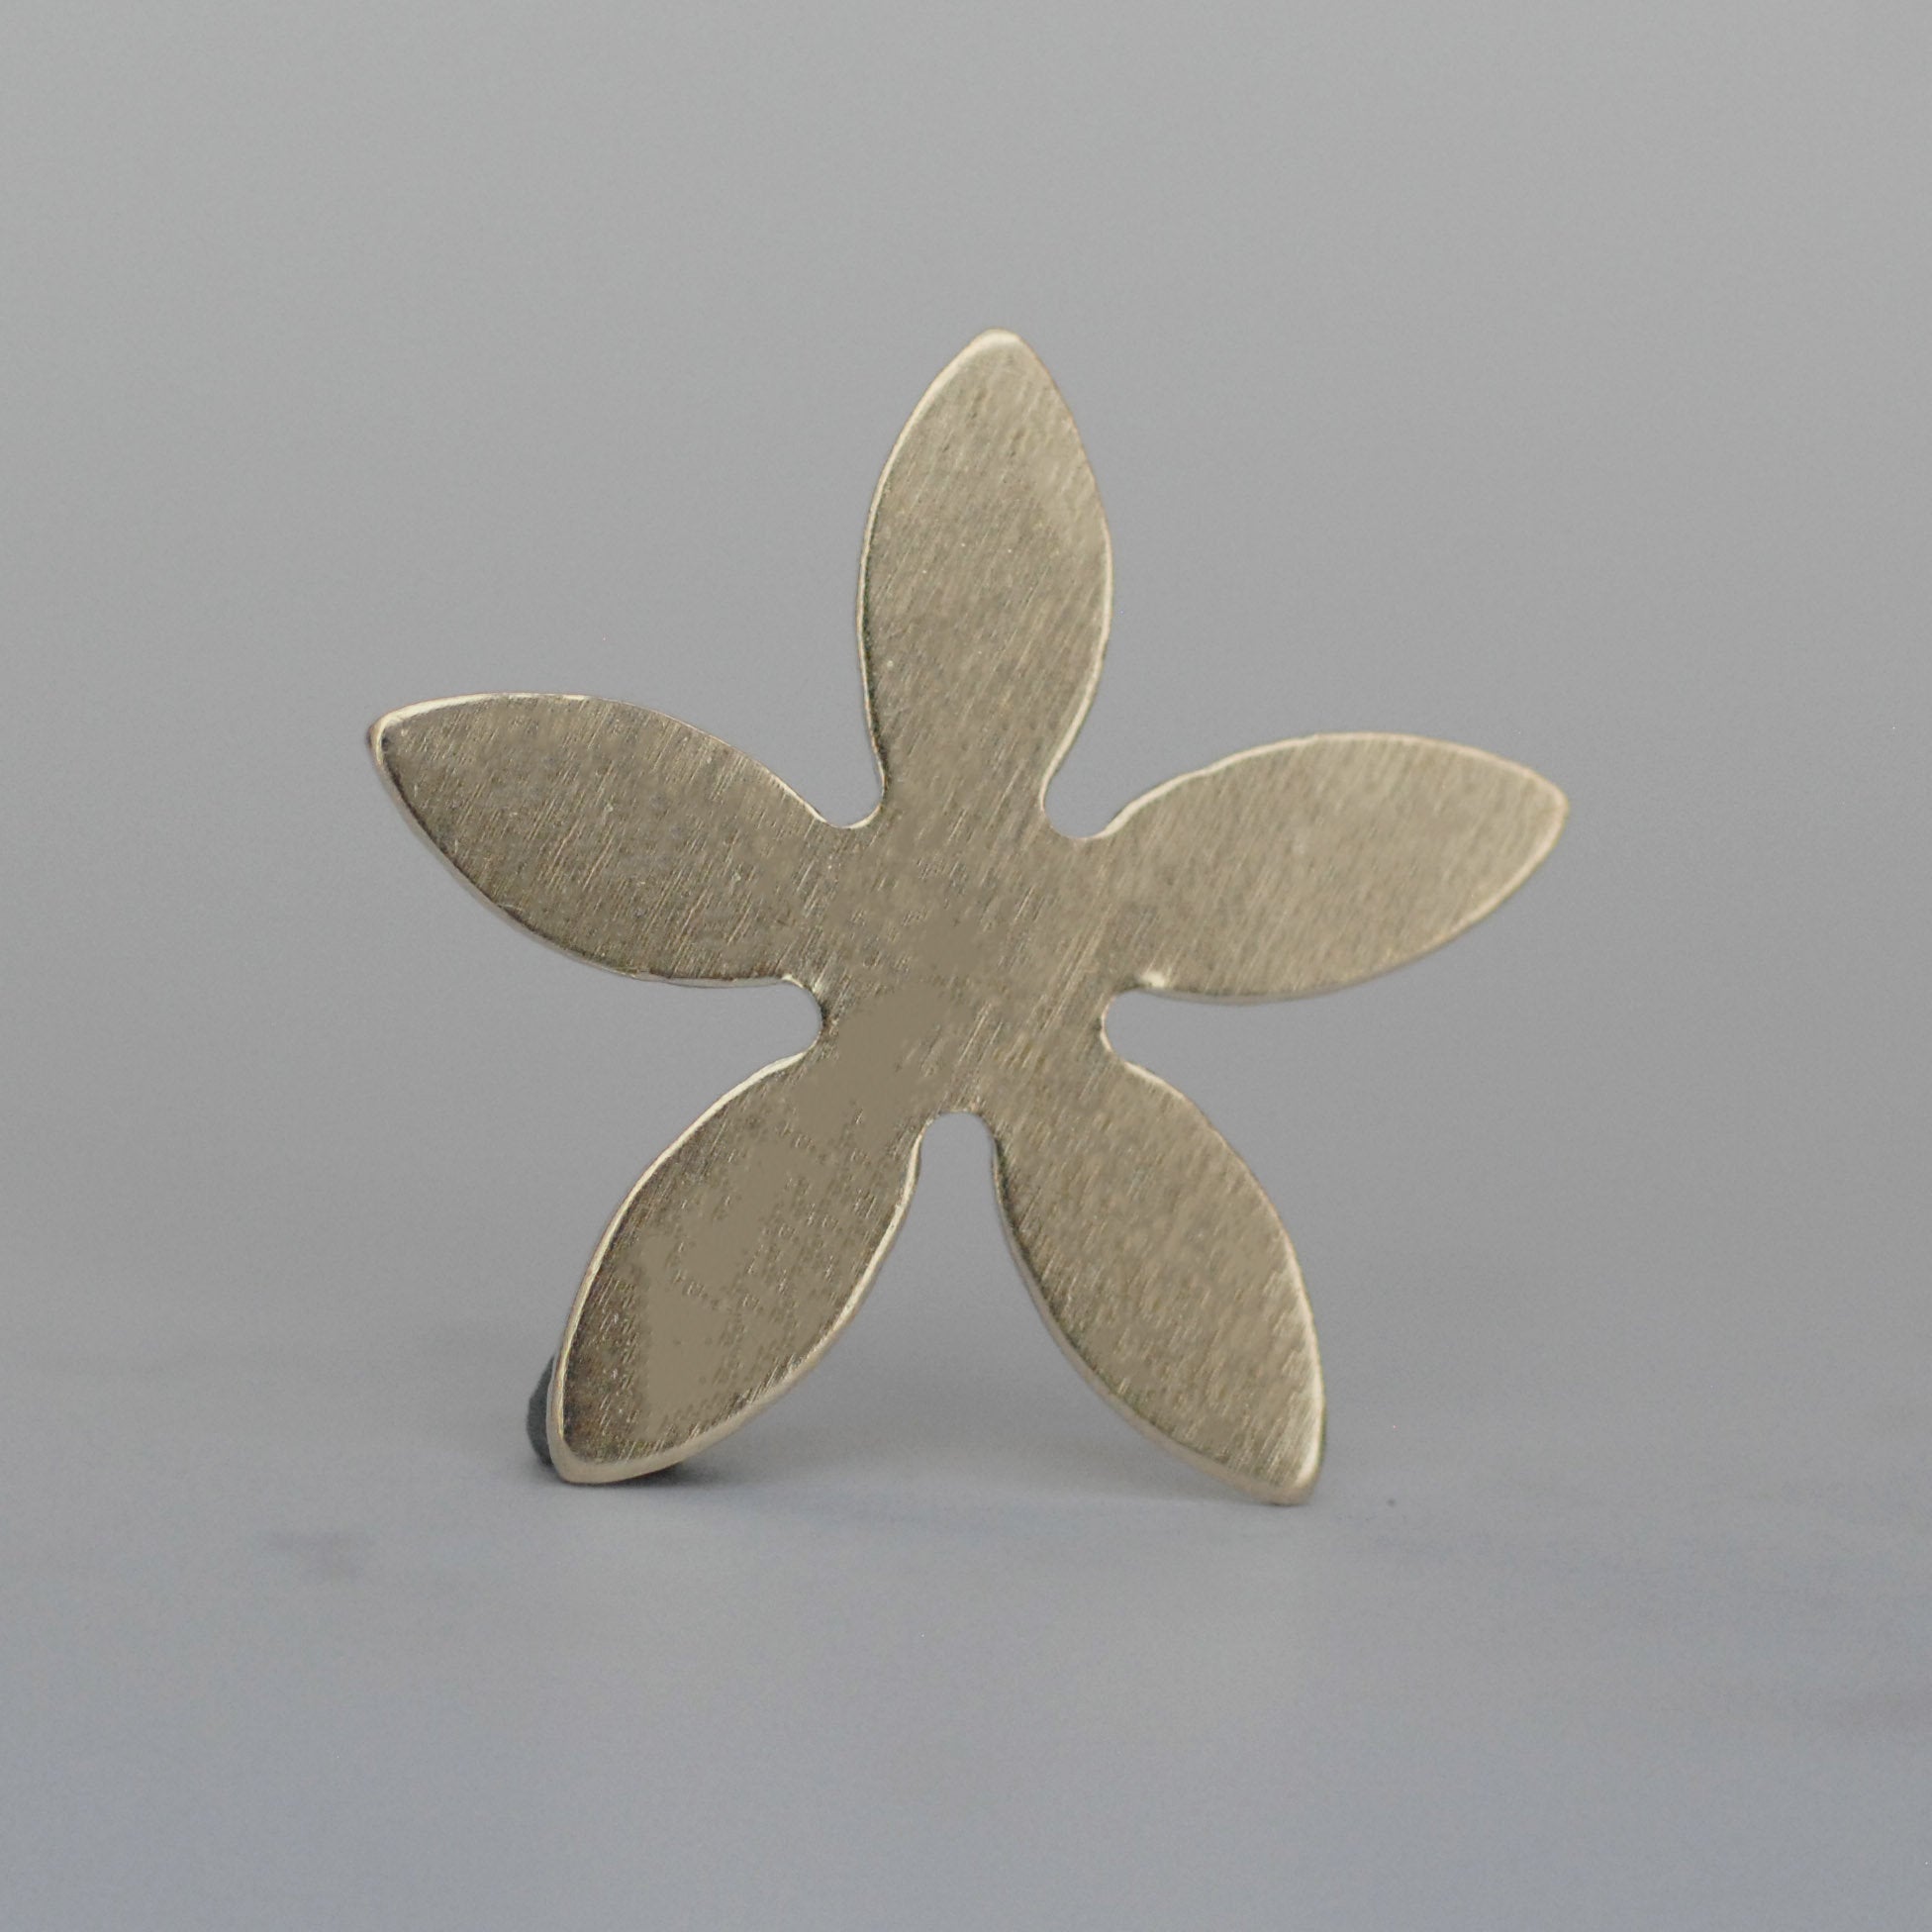 Flower shape metal blanks for making jewelry 26mm copper, brass, bronze, or nickel silver 22g 20g